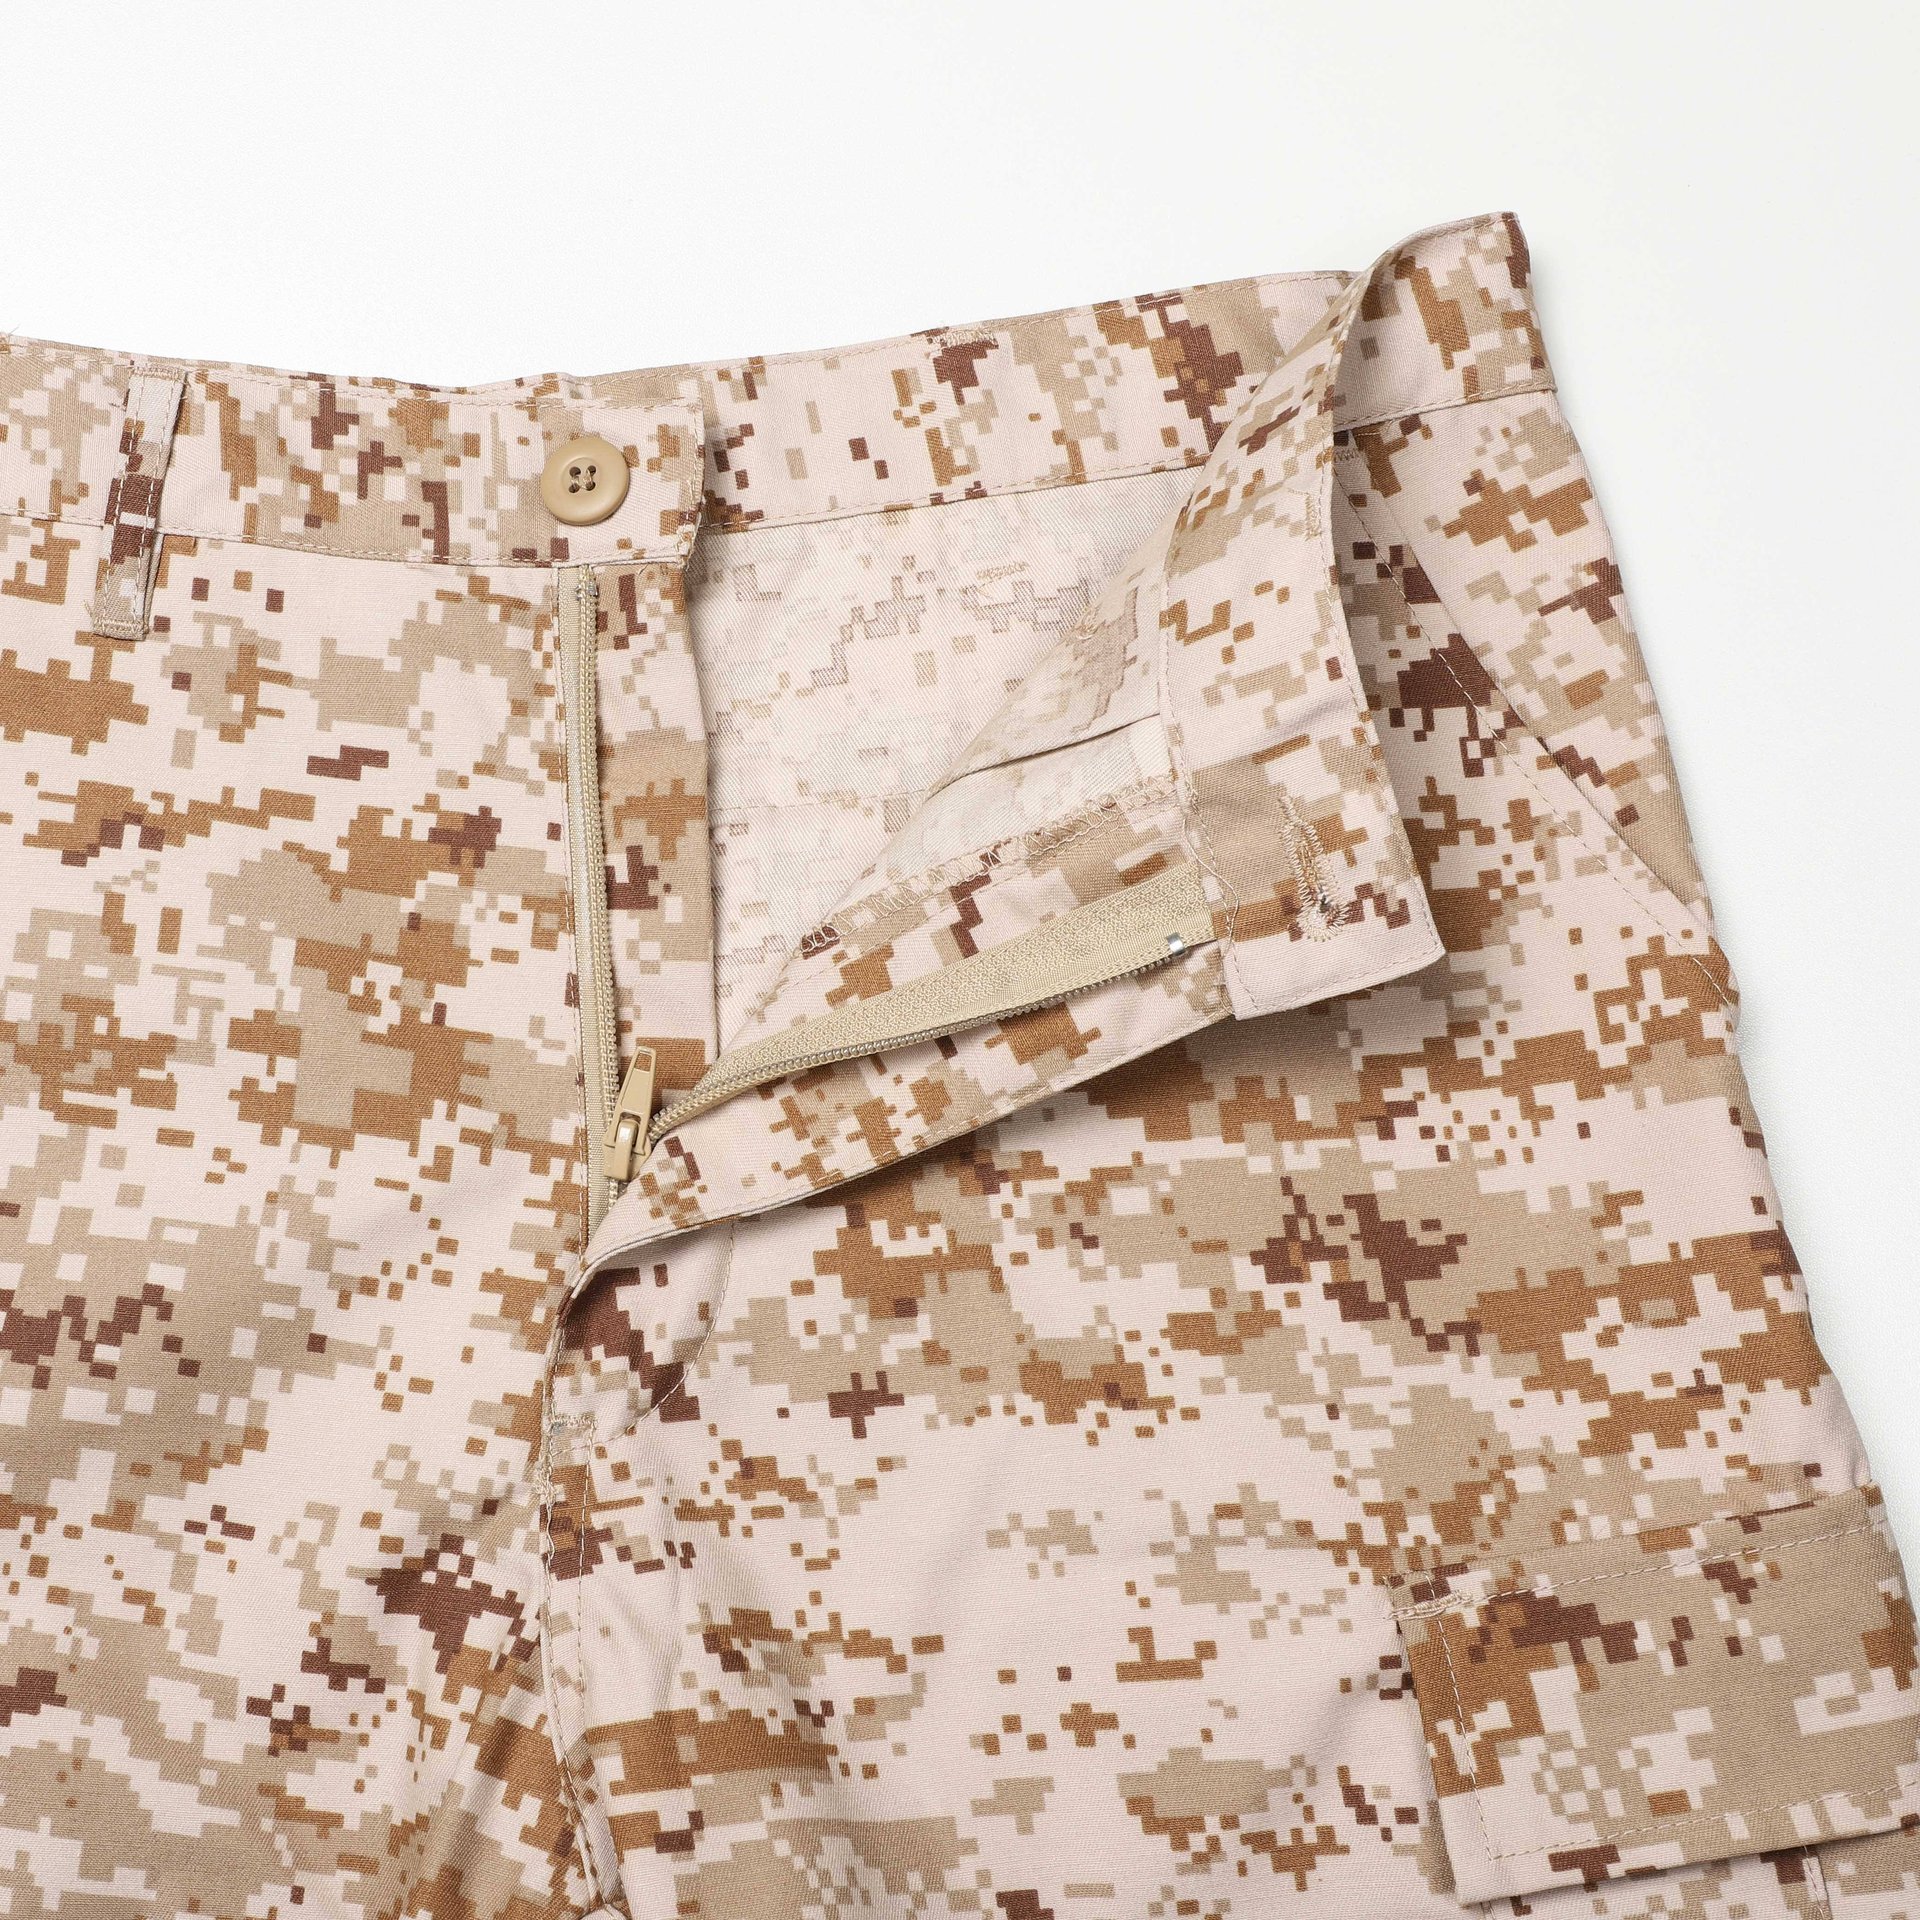 Battles Tactical Uniform ACU US Tactical Digital Desert Camouflage Pants Shorts